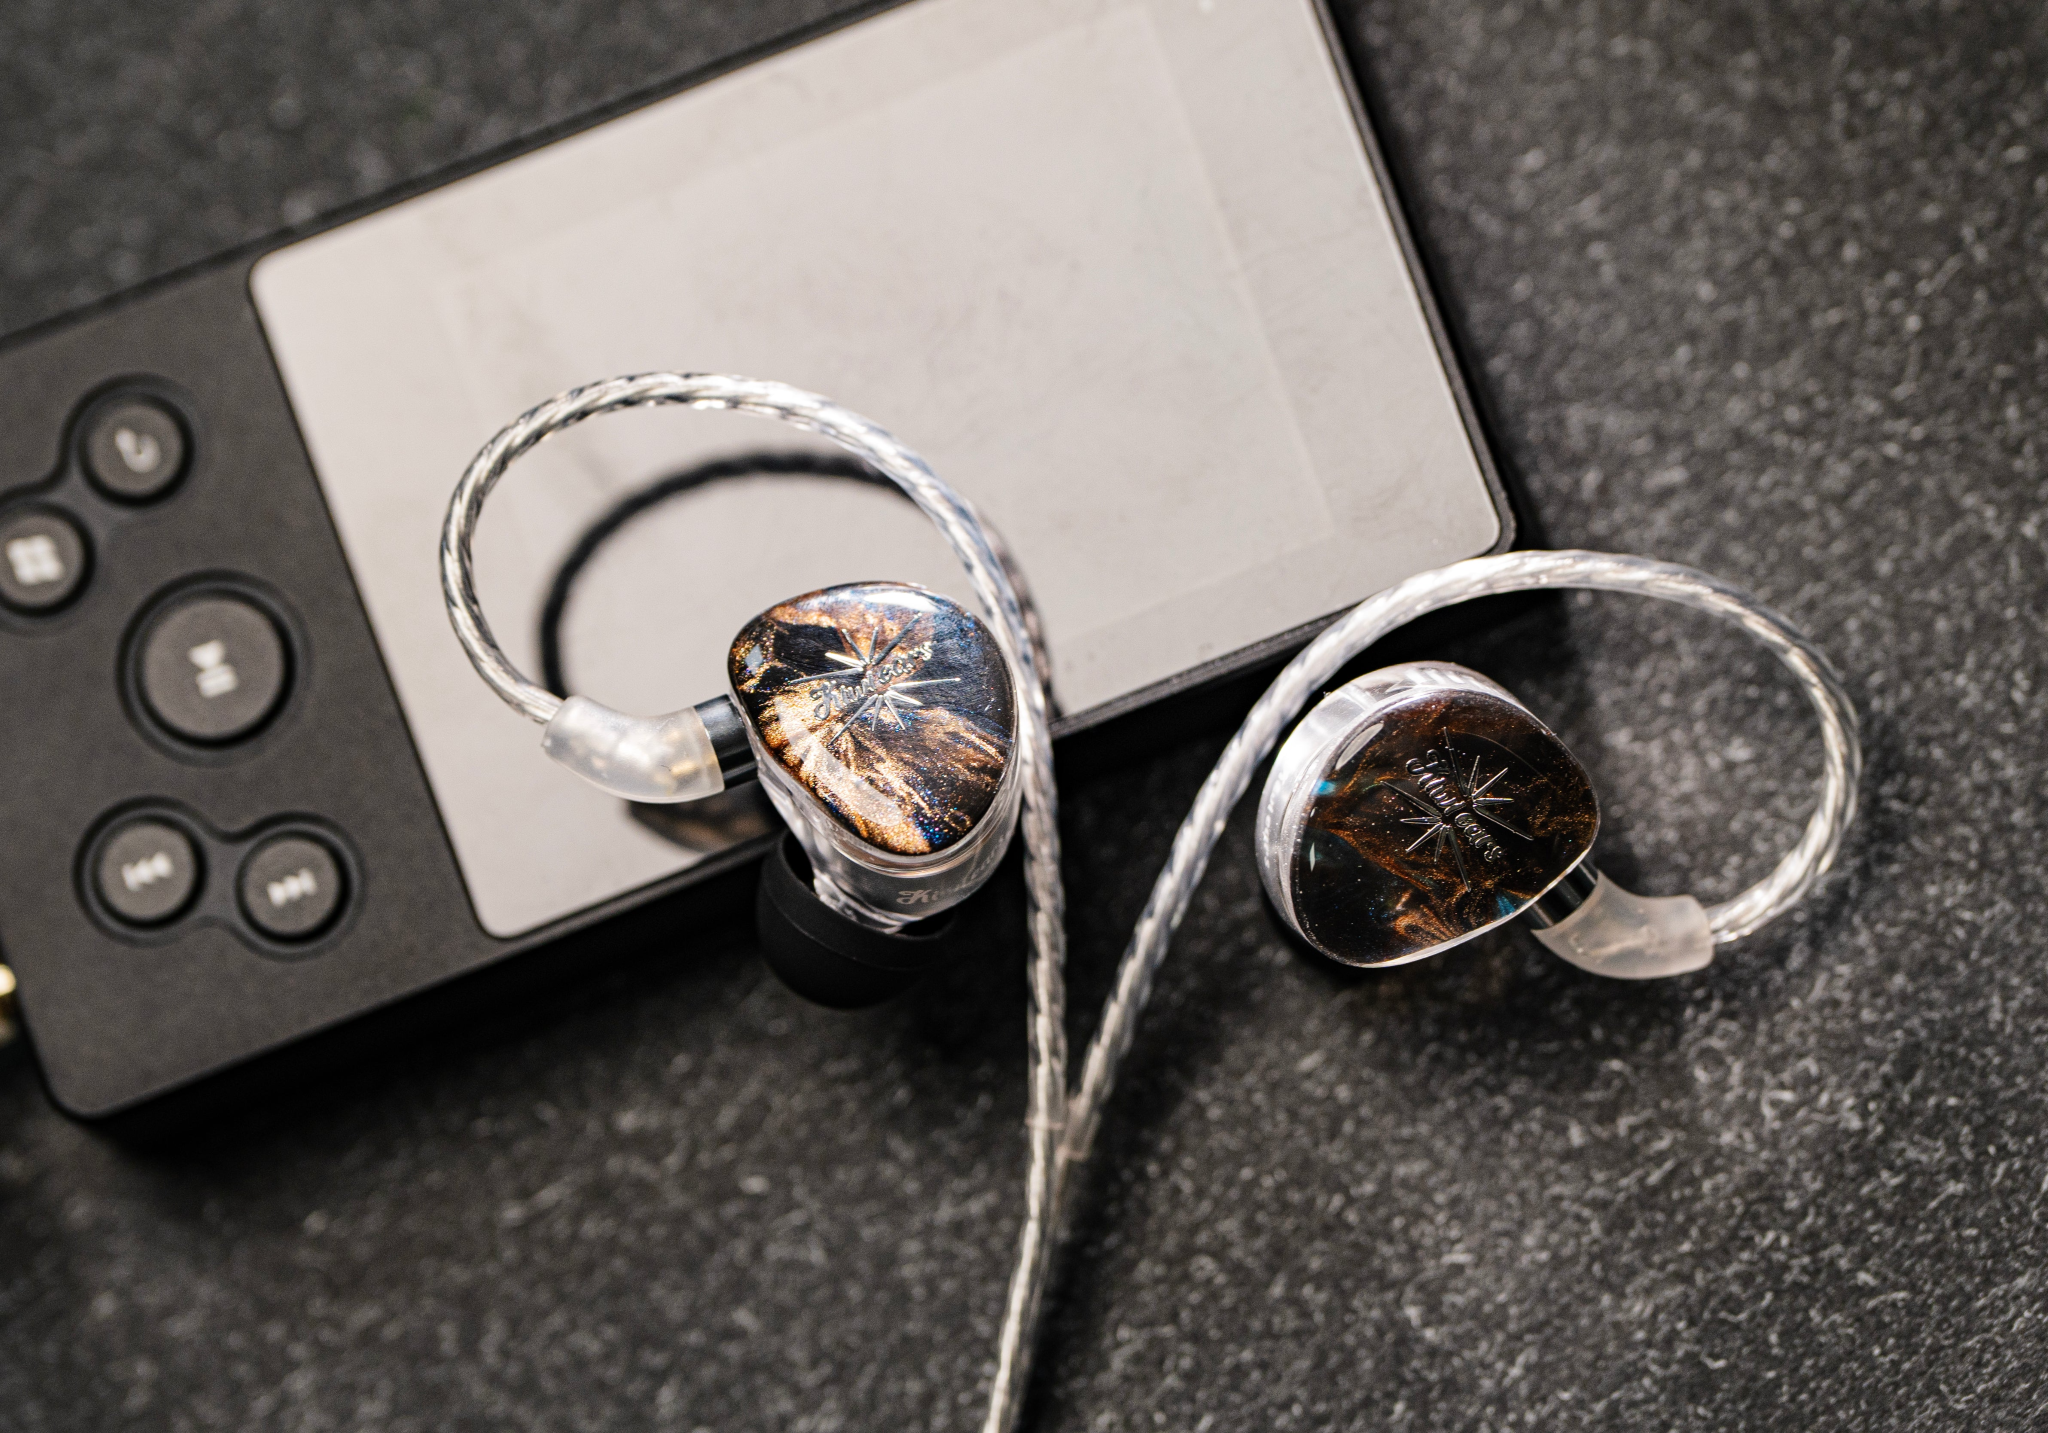 Kiwi Ears x Crinacle Singolo Custom 11mm Dynamic Driver IEM with KIWI Acoustic Resonance System (KARS)